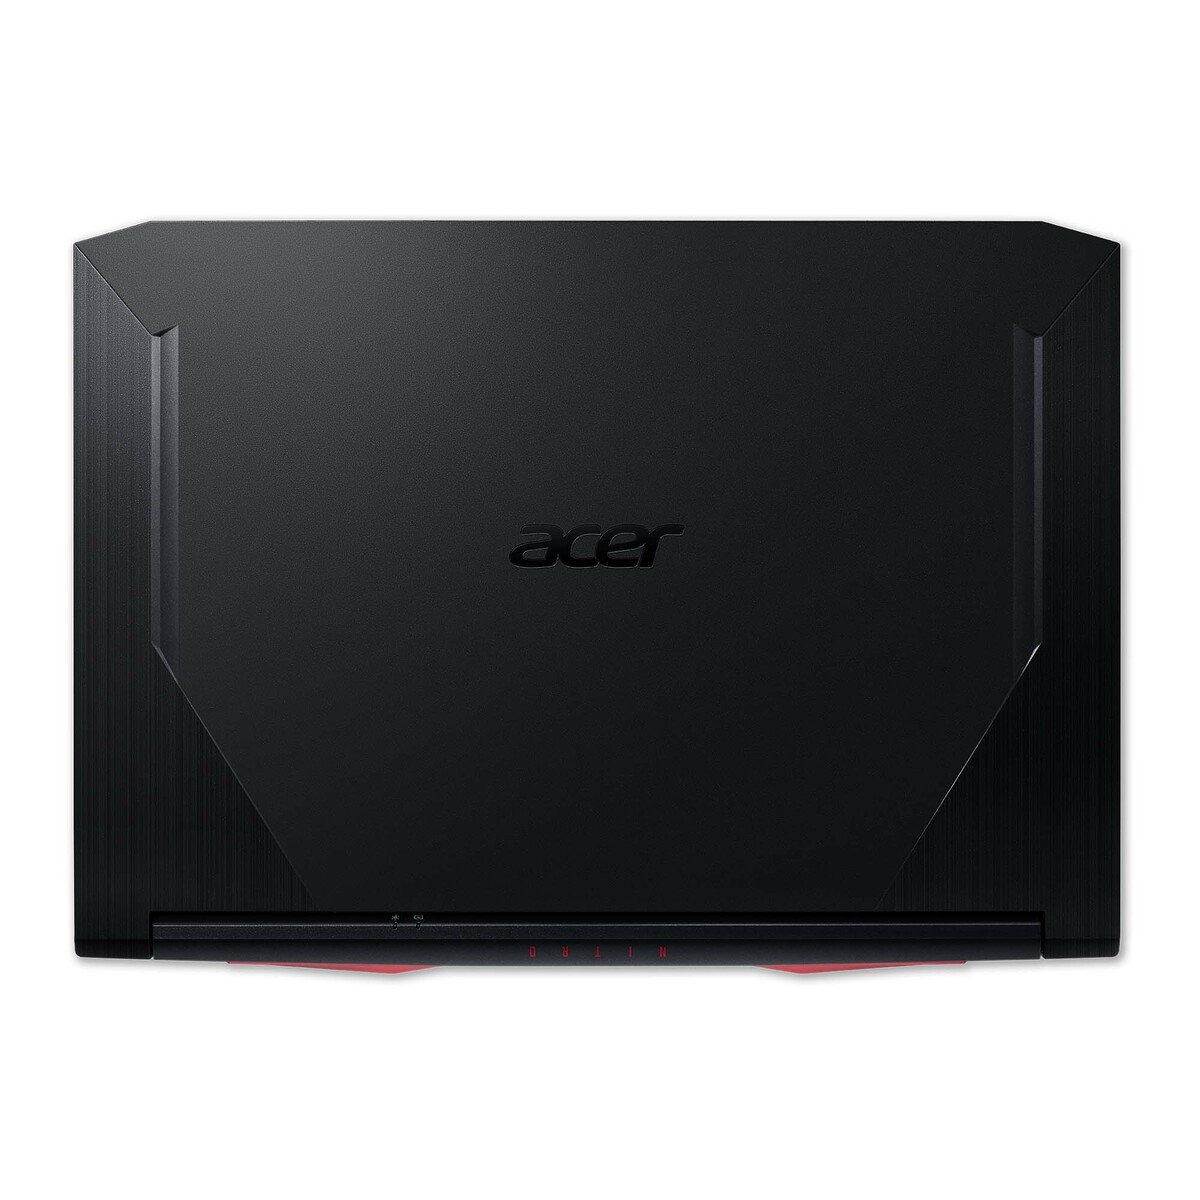 Acer Gaming Notebook AN515-55-558U Intel core i5 10300H, 8GB RAM, 1TB SSD, 4GB NVIDIA GeForce, 15.6 inch Screen, Windows 10 Home, Black